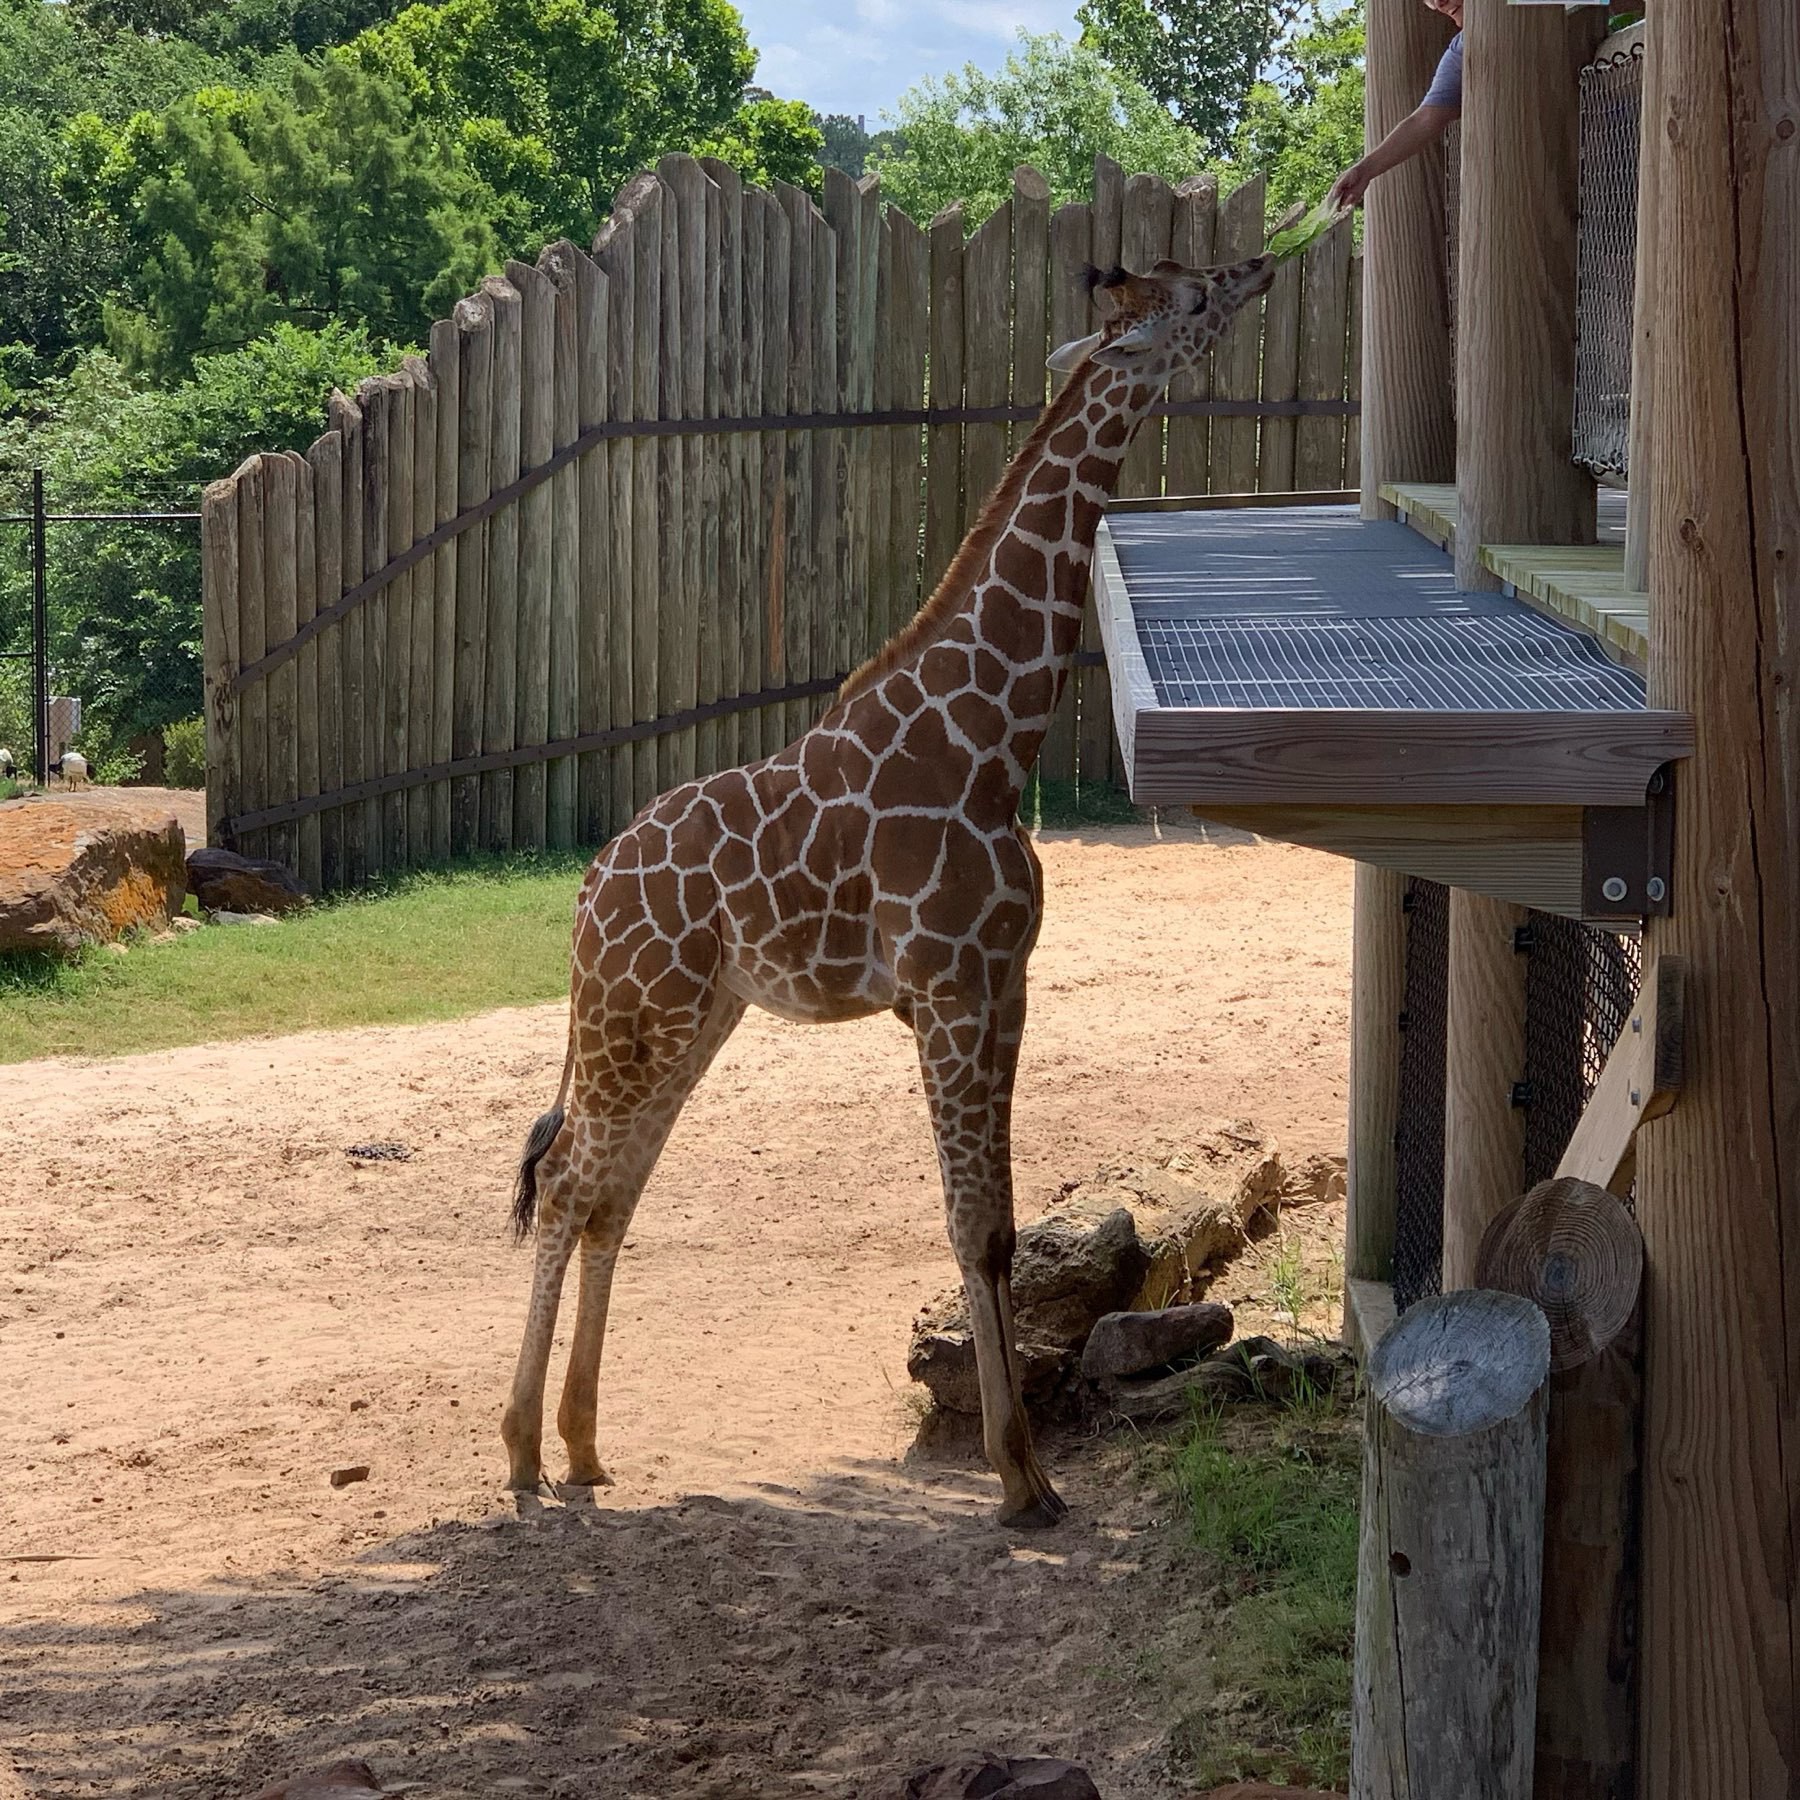 Baby giraffe at the zoo.